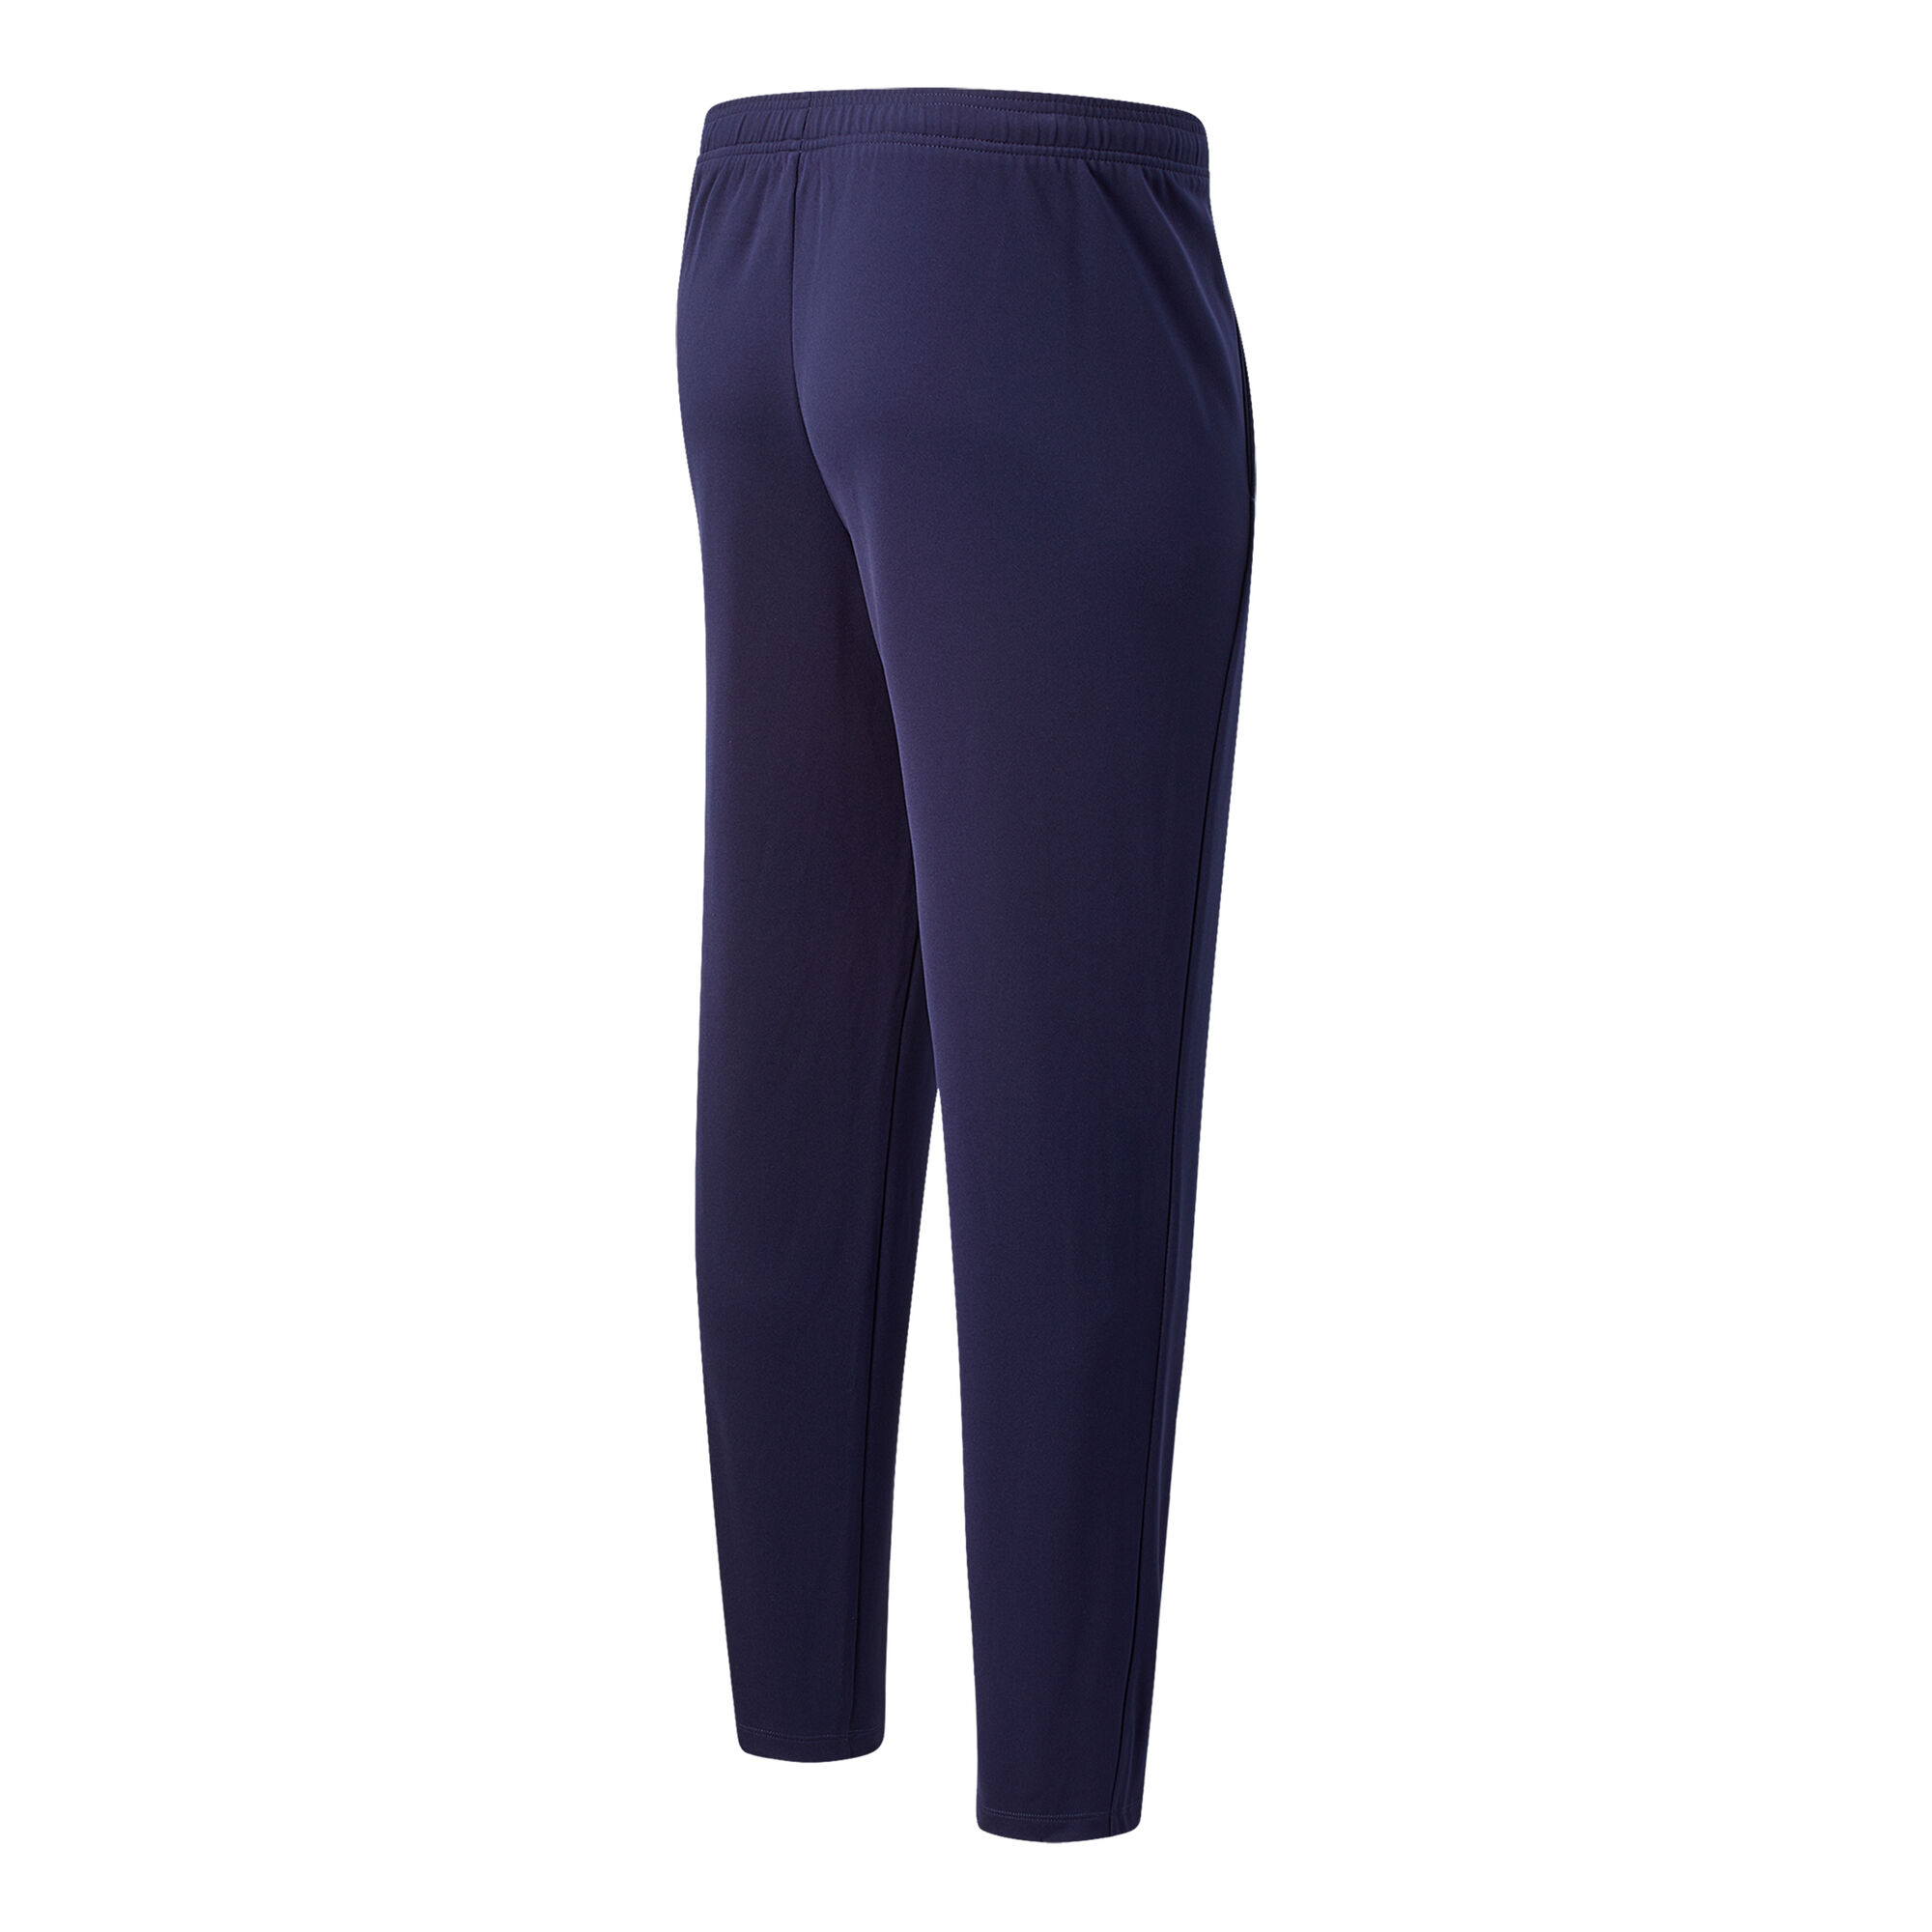 Buy New Balance Core Knit Training Pants Men Blue online